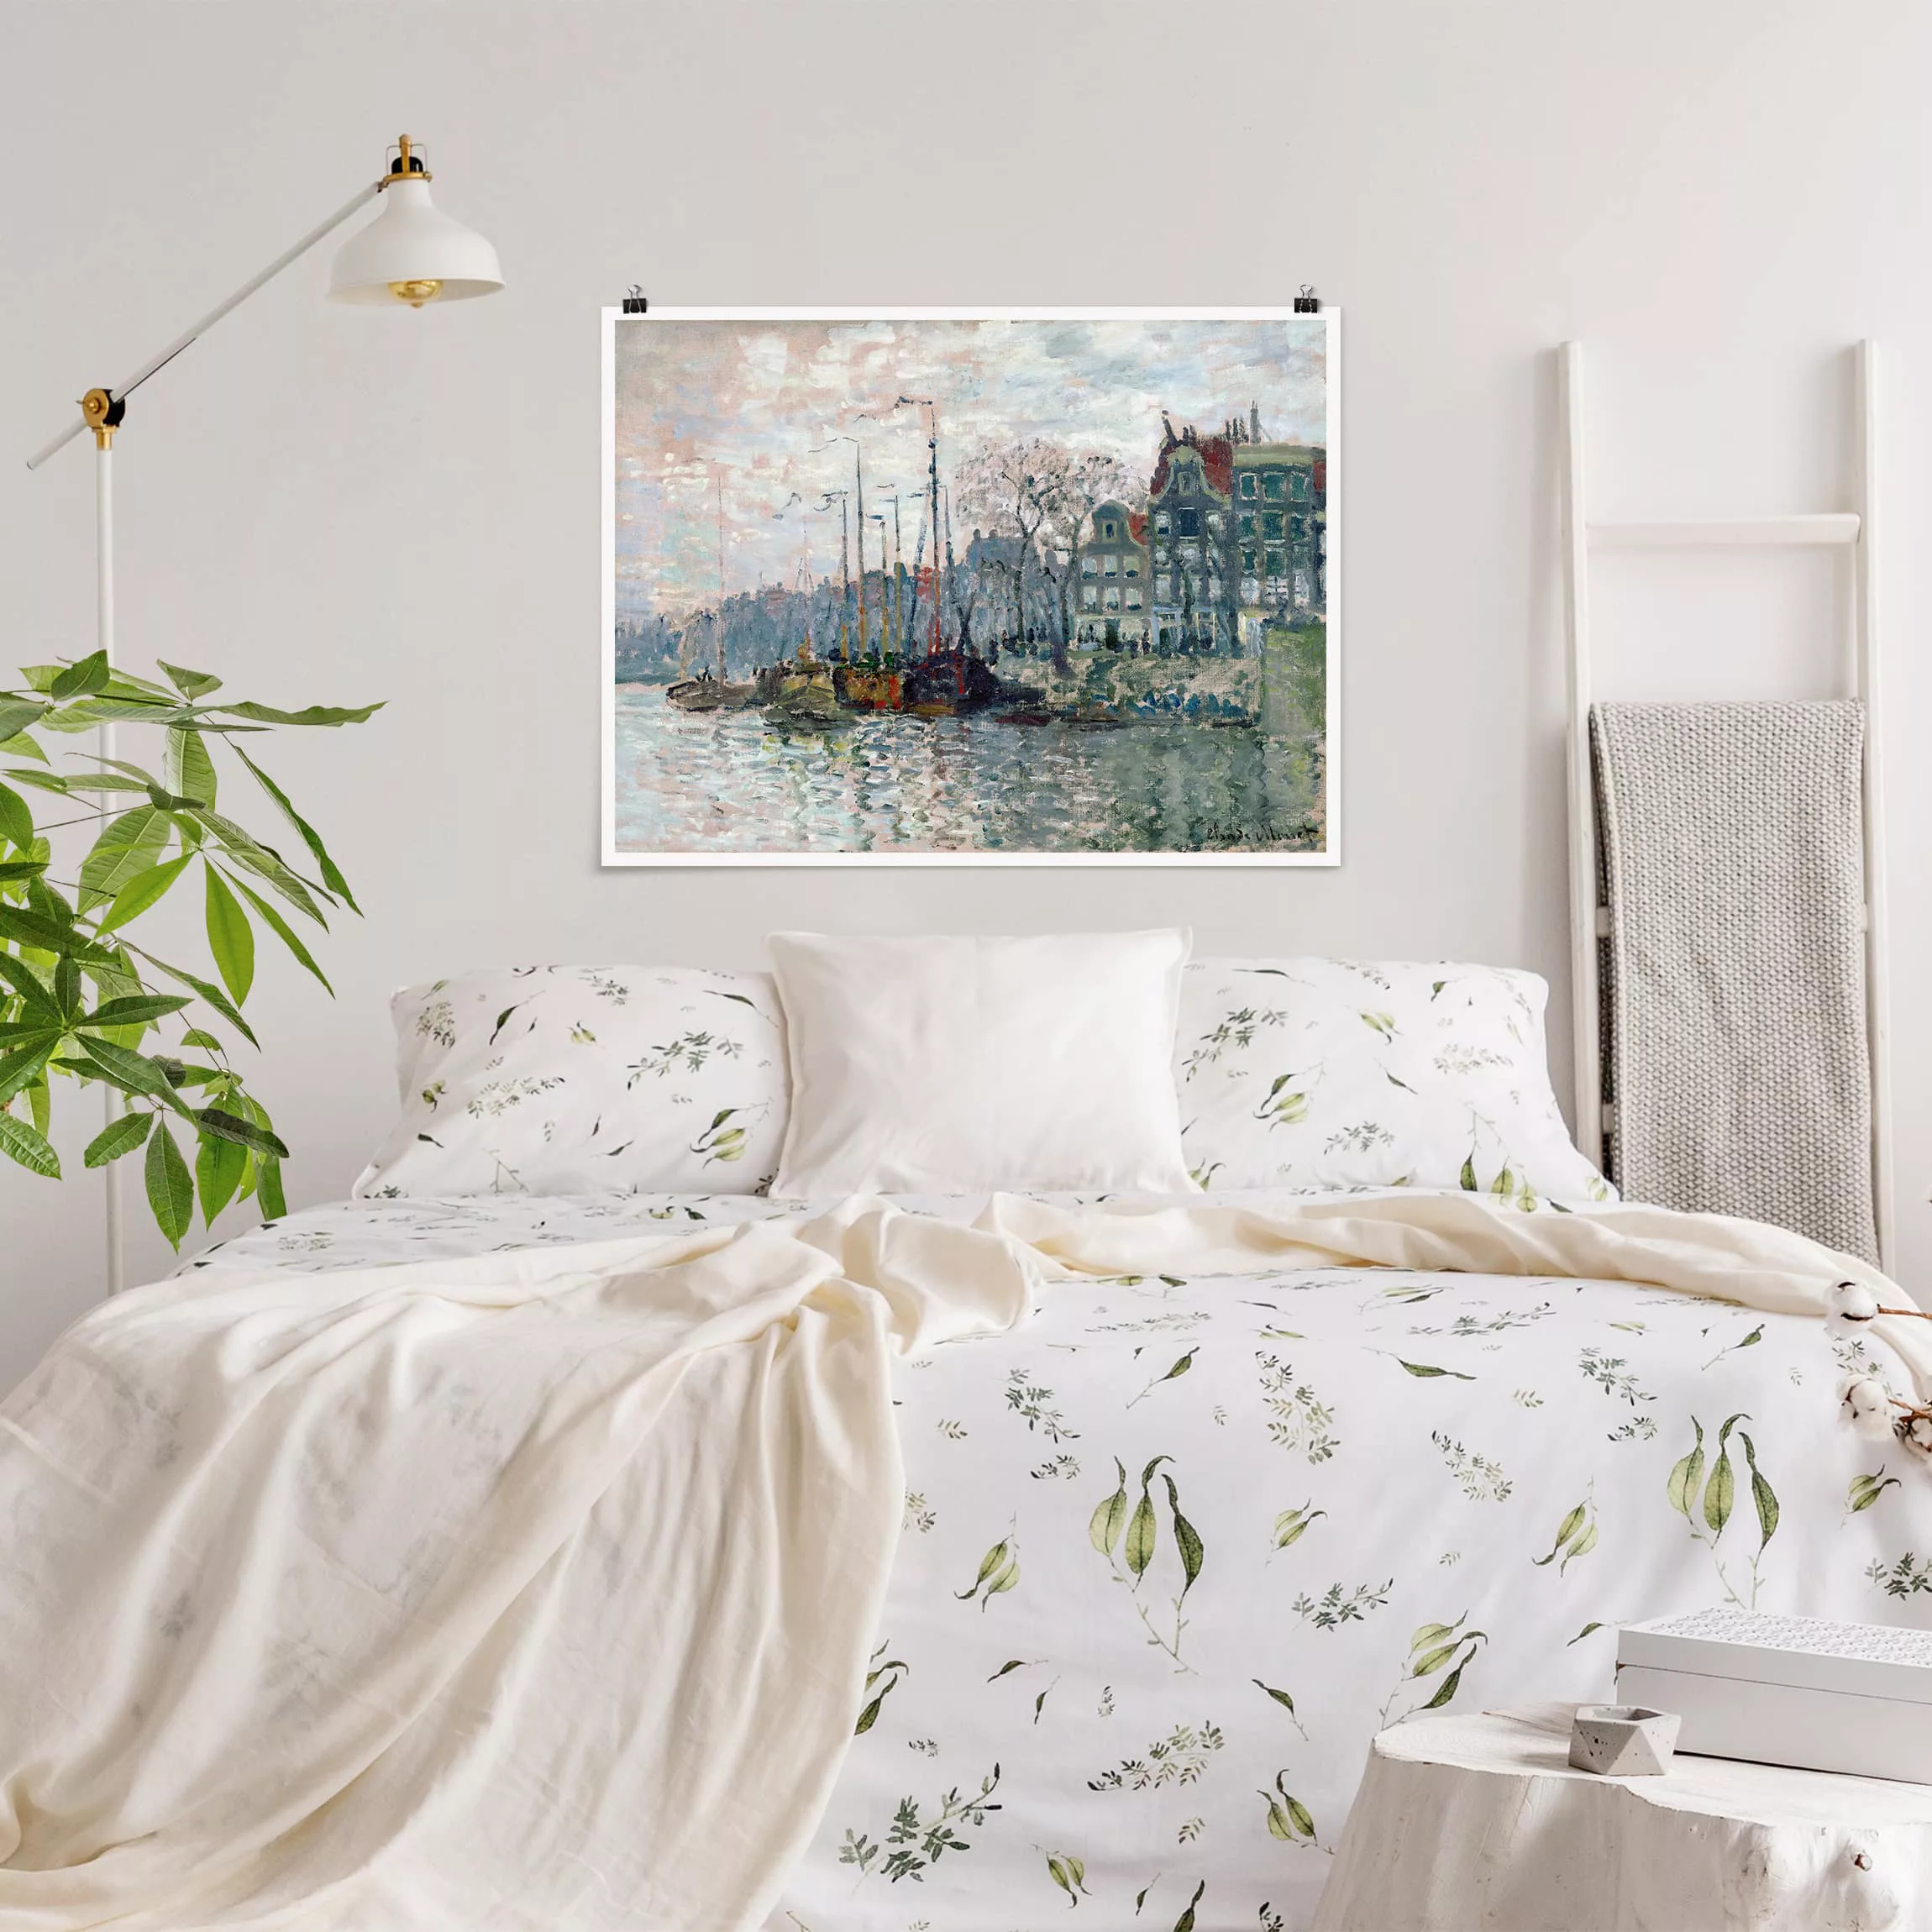 Poster Kunstdruck - Querformat Claude Monet - Kromme Waal Amsterdam günstig online kaufen